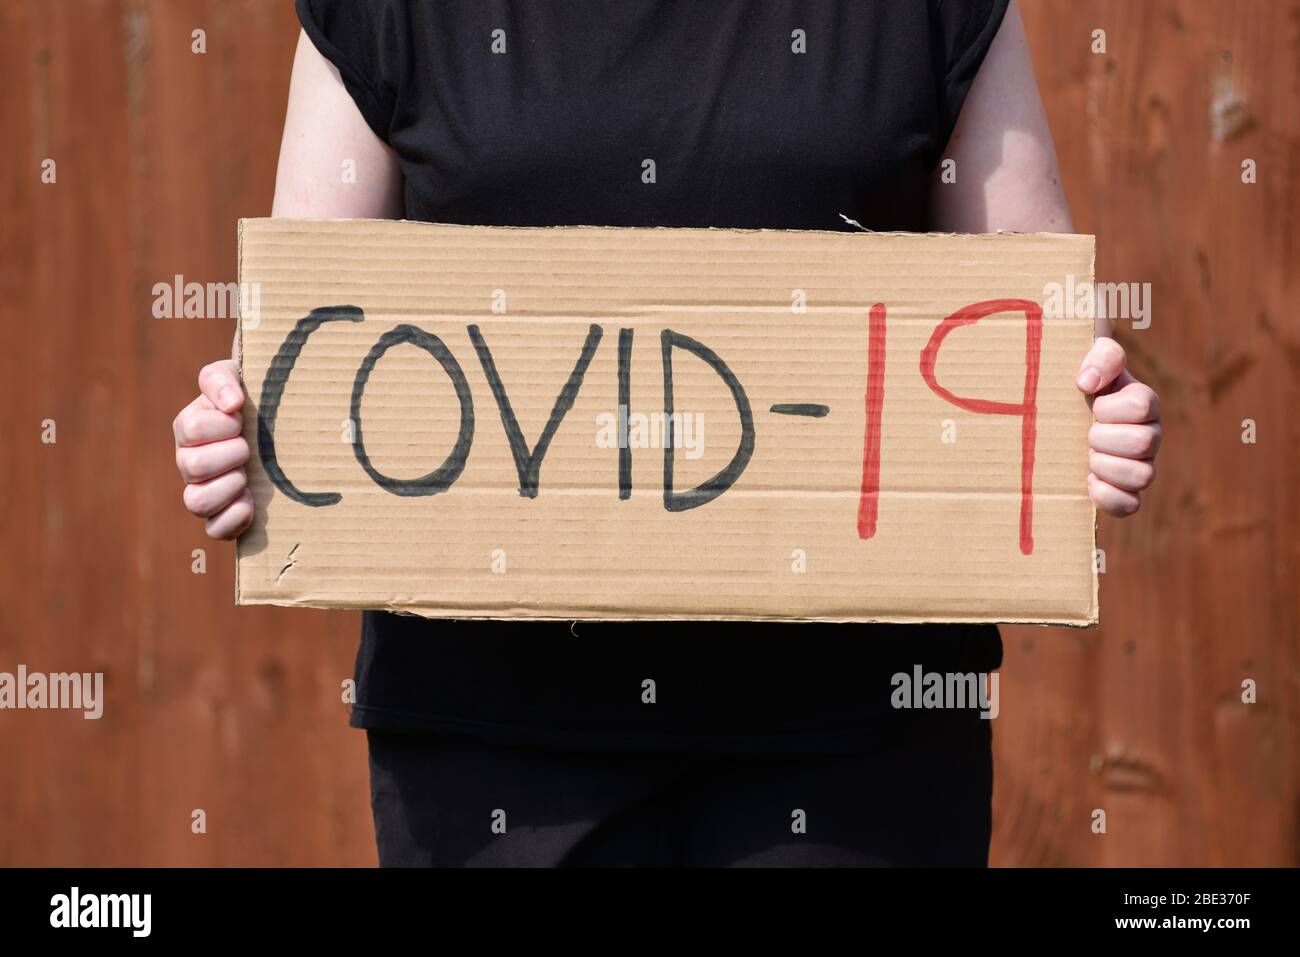 Coronavirus sign Rainbow Message Stay at Home Covid-19 . Stock Photo